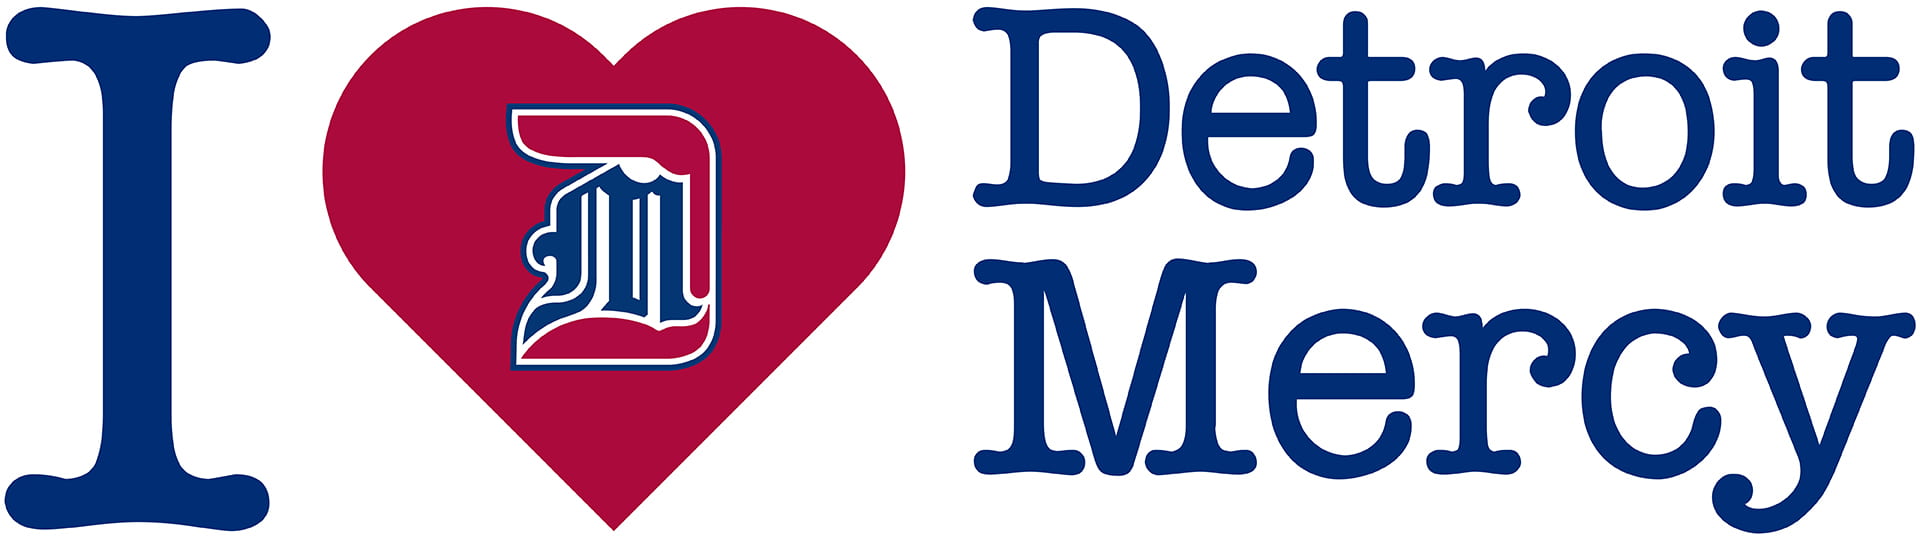 I Heart Detroit Mercy Banner Graphic